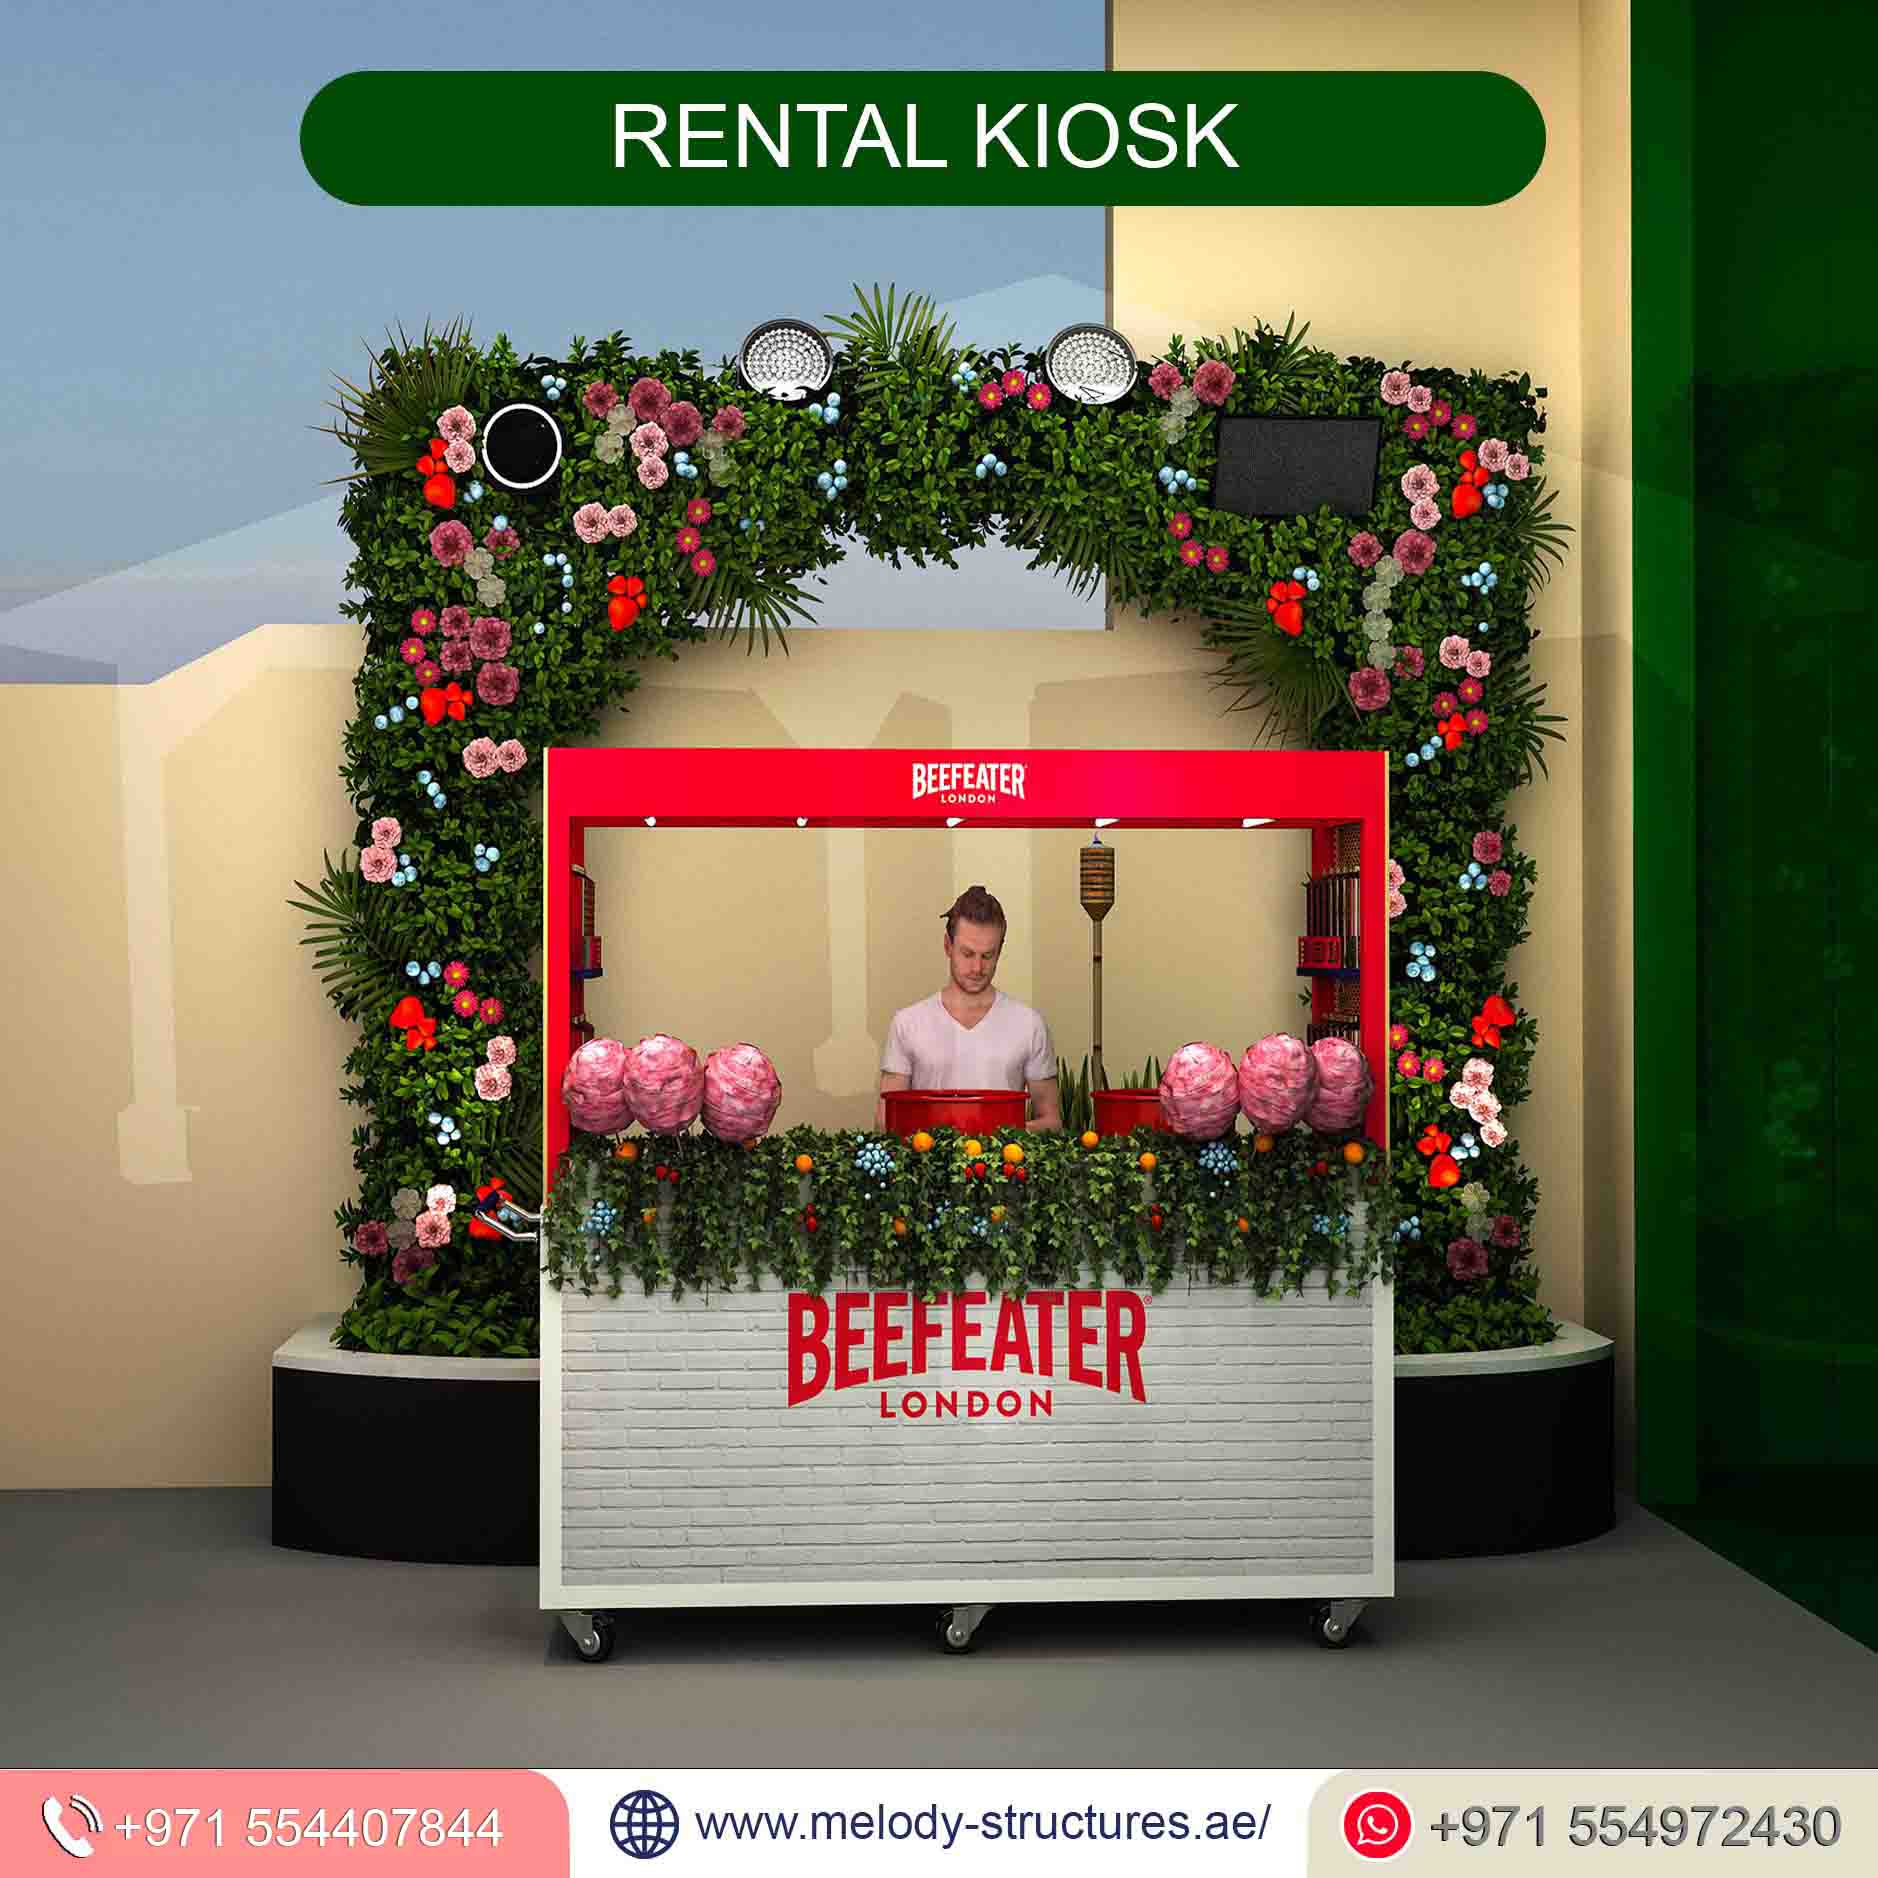 Ready-to-Use Kiosk Rentals in Dubai, Abu Dhabi, and Sharjah